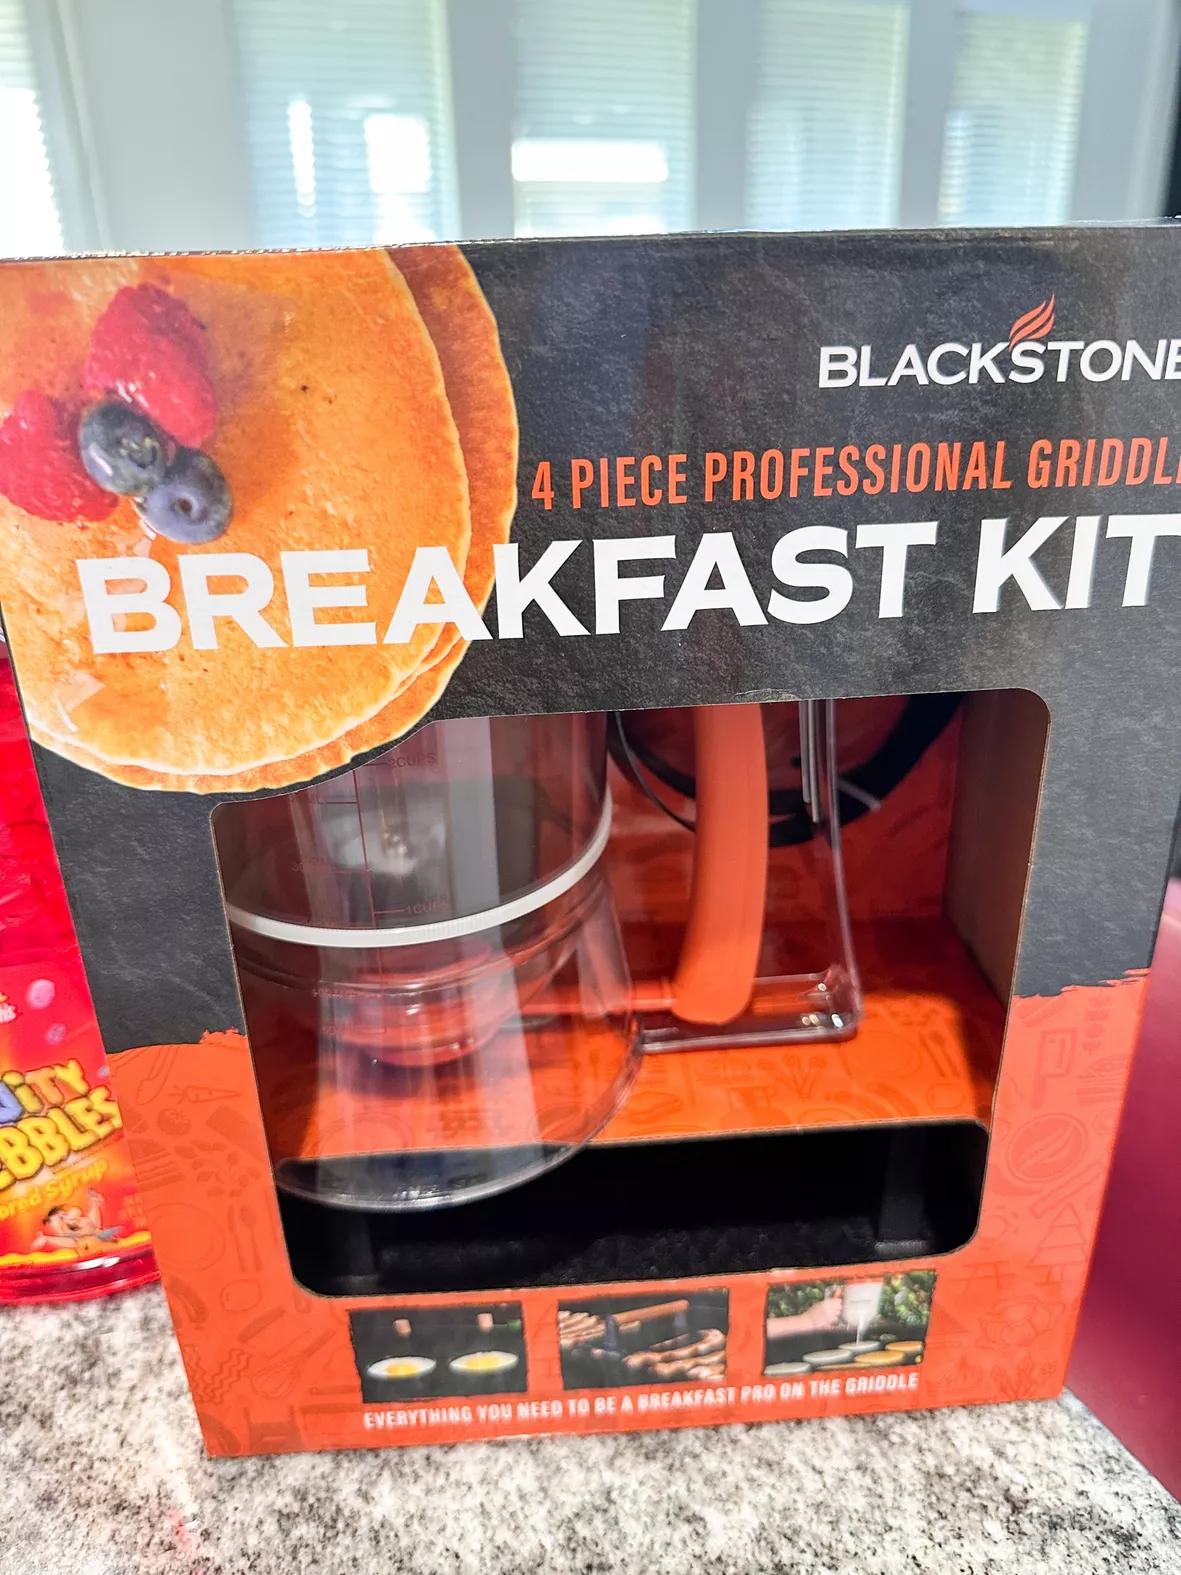 Blackstone Professional Griddle Breakfast Kit, 4-Piece 